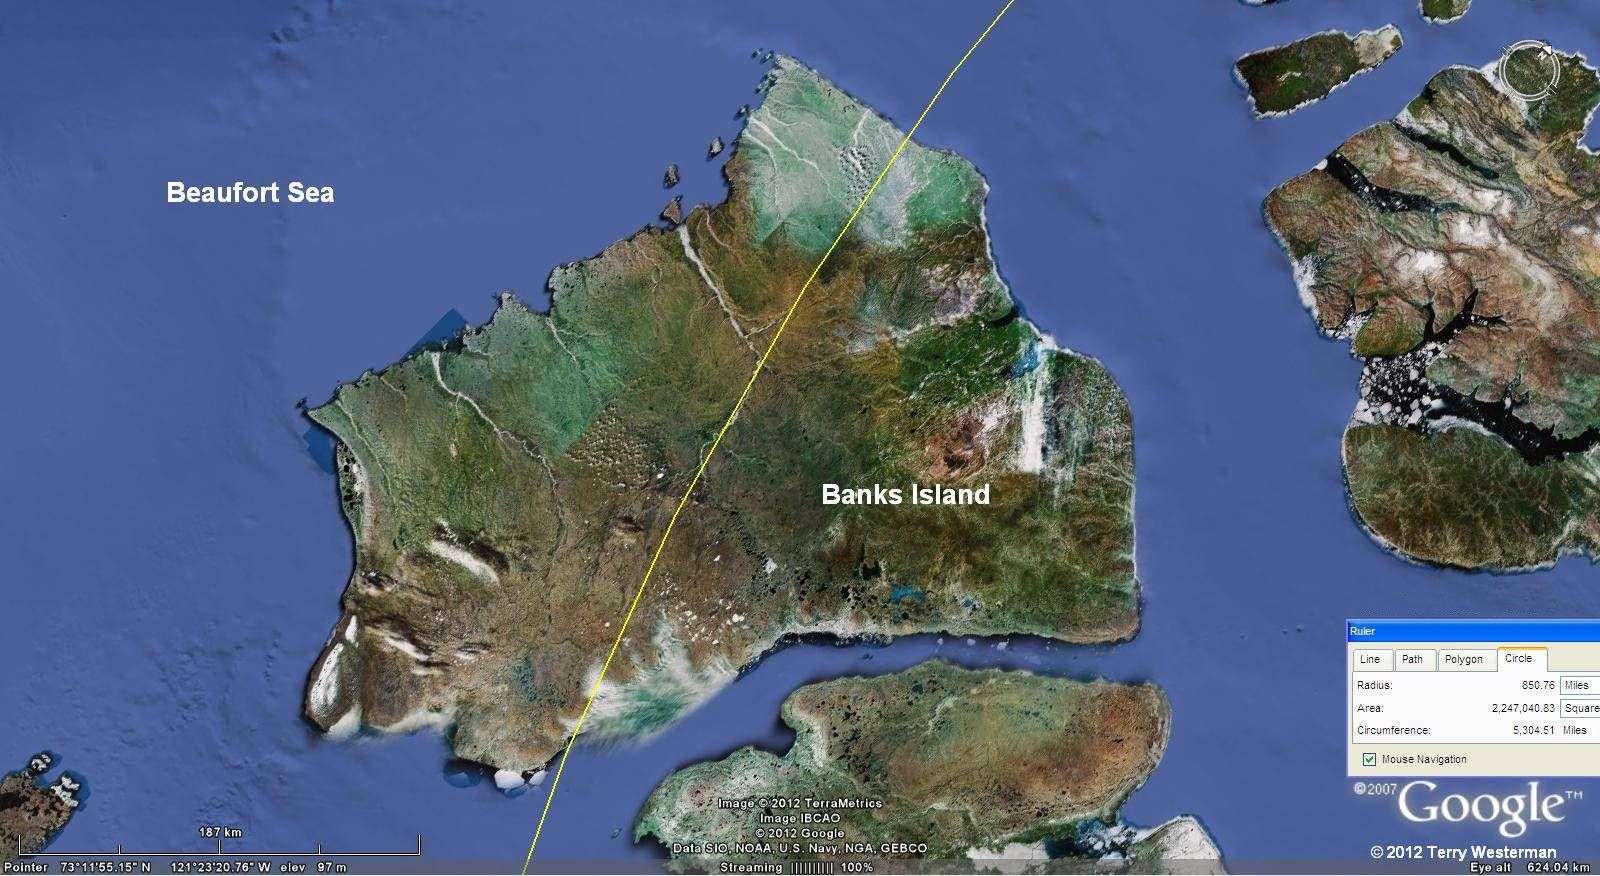 The Baffin Island 850 mile radius seismic circle crosses Banks Island.